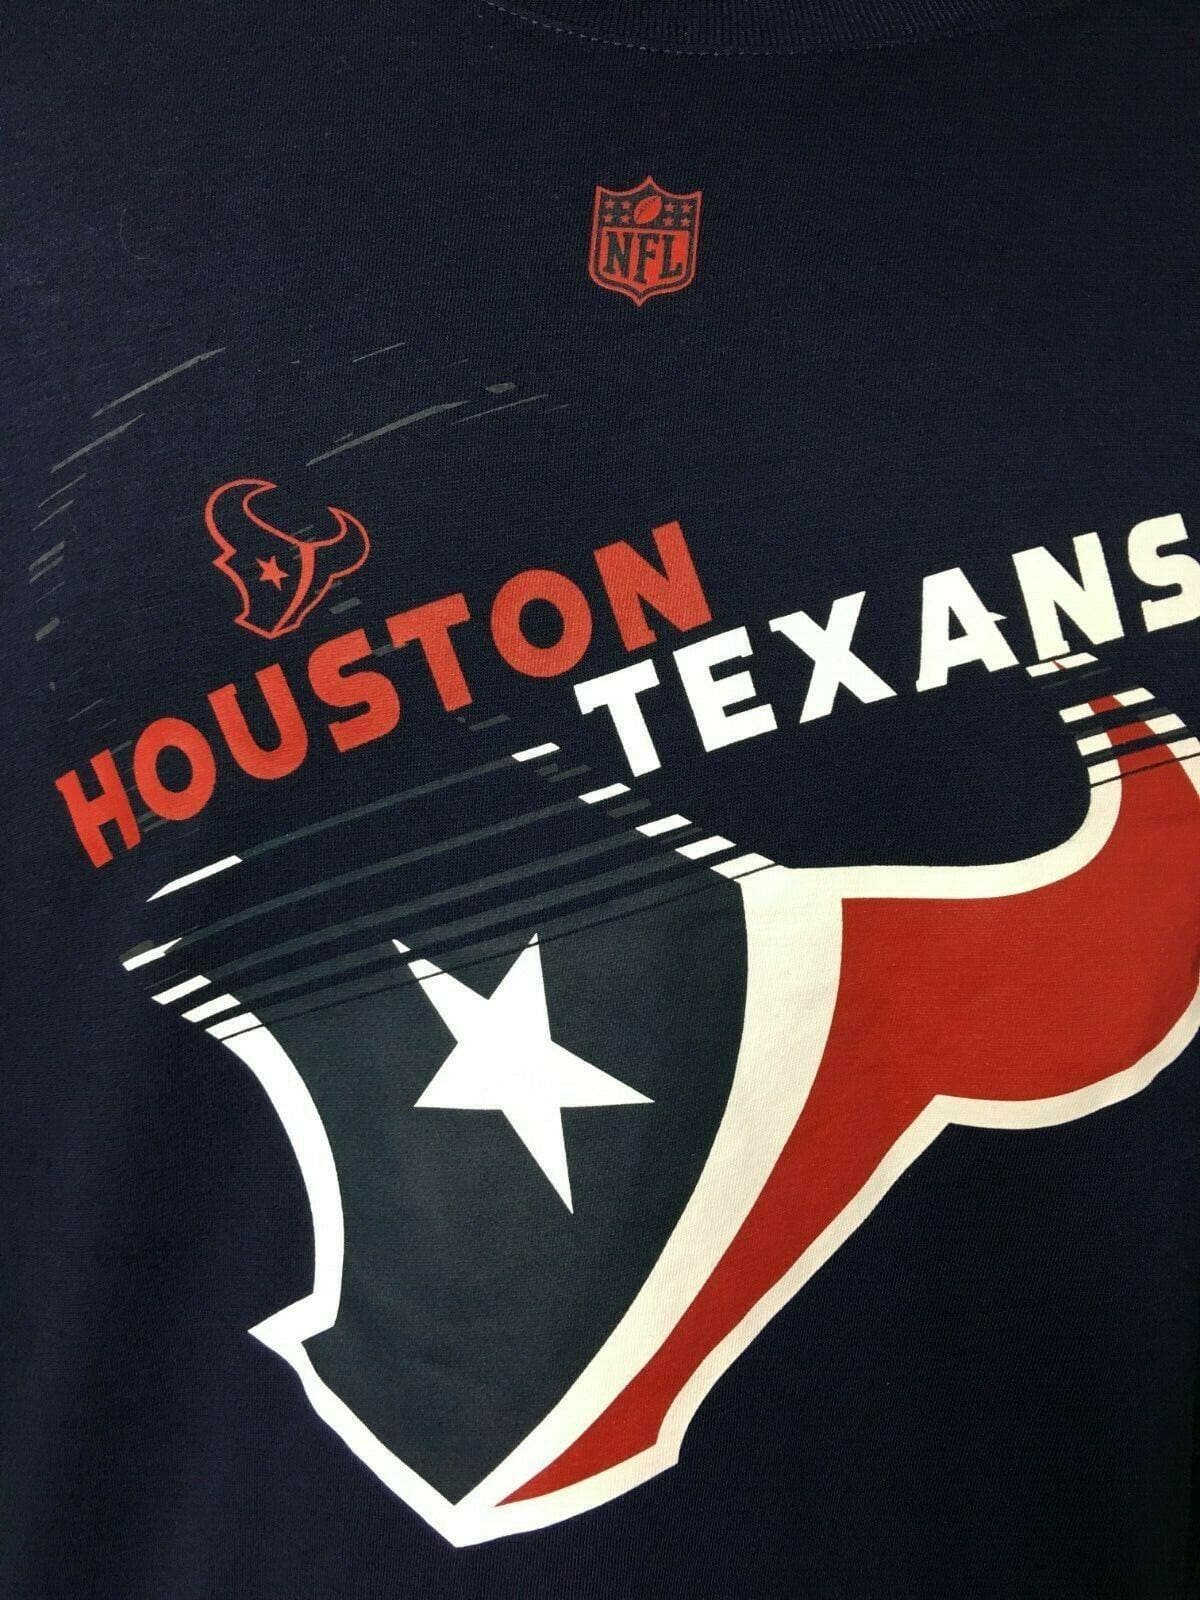 NFL Houston Texans Dri-Fit L/S T-Shirt Youth Large 14-16 NWT